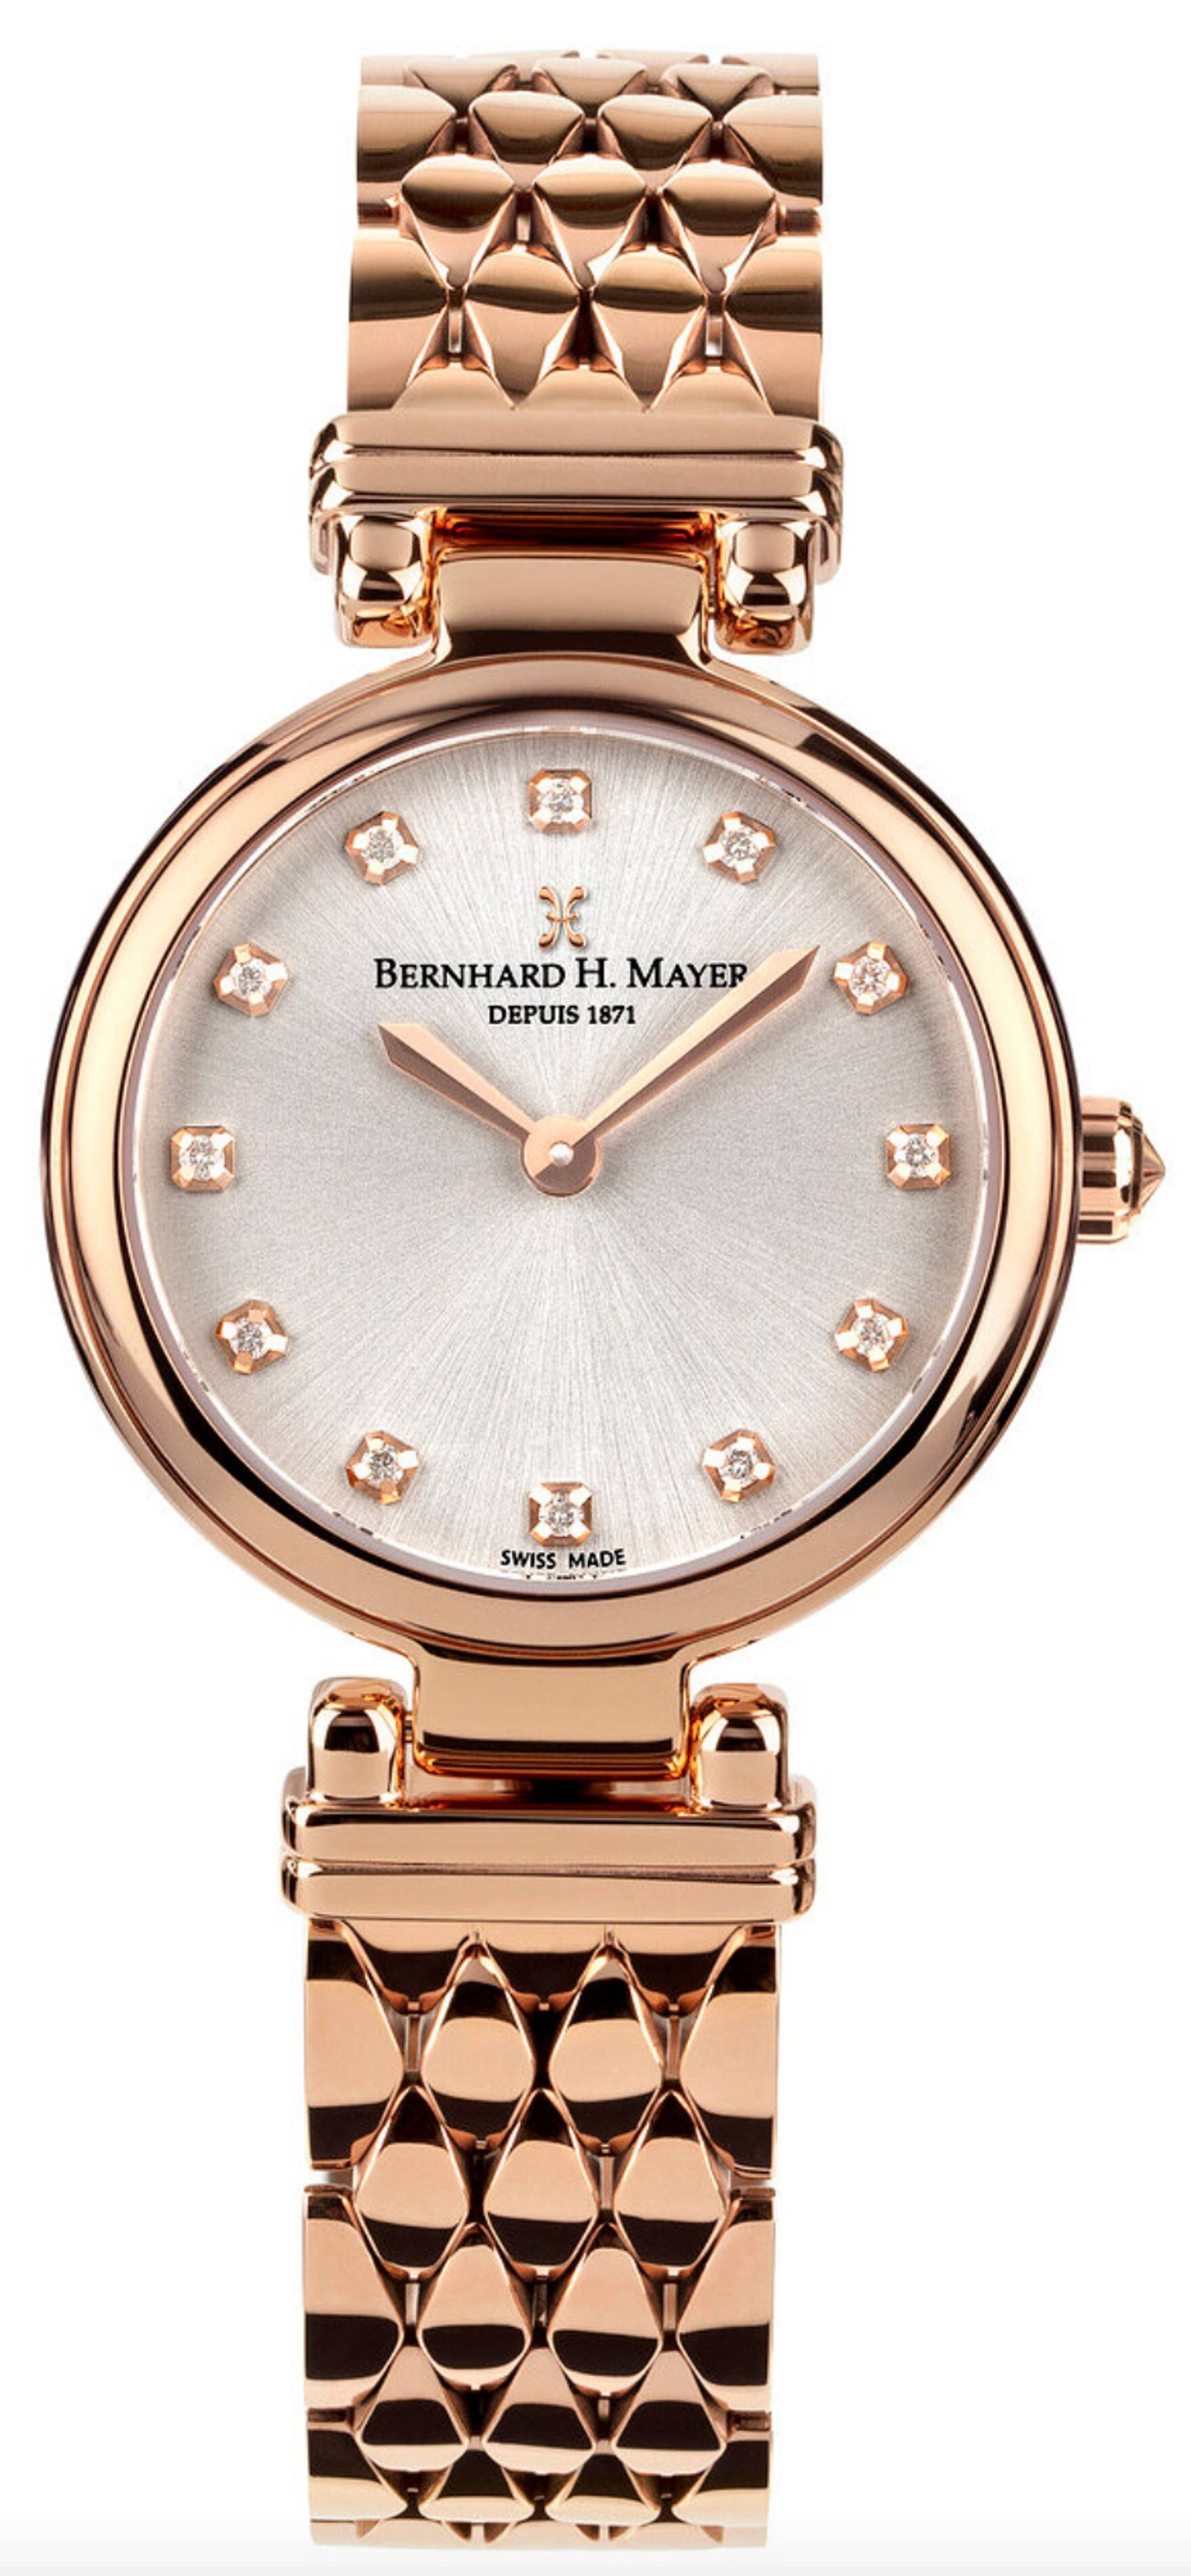 Часы Lurve Diamond Watch бренда Bernhard H. Mayer. Источник: архив пресс-службы